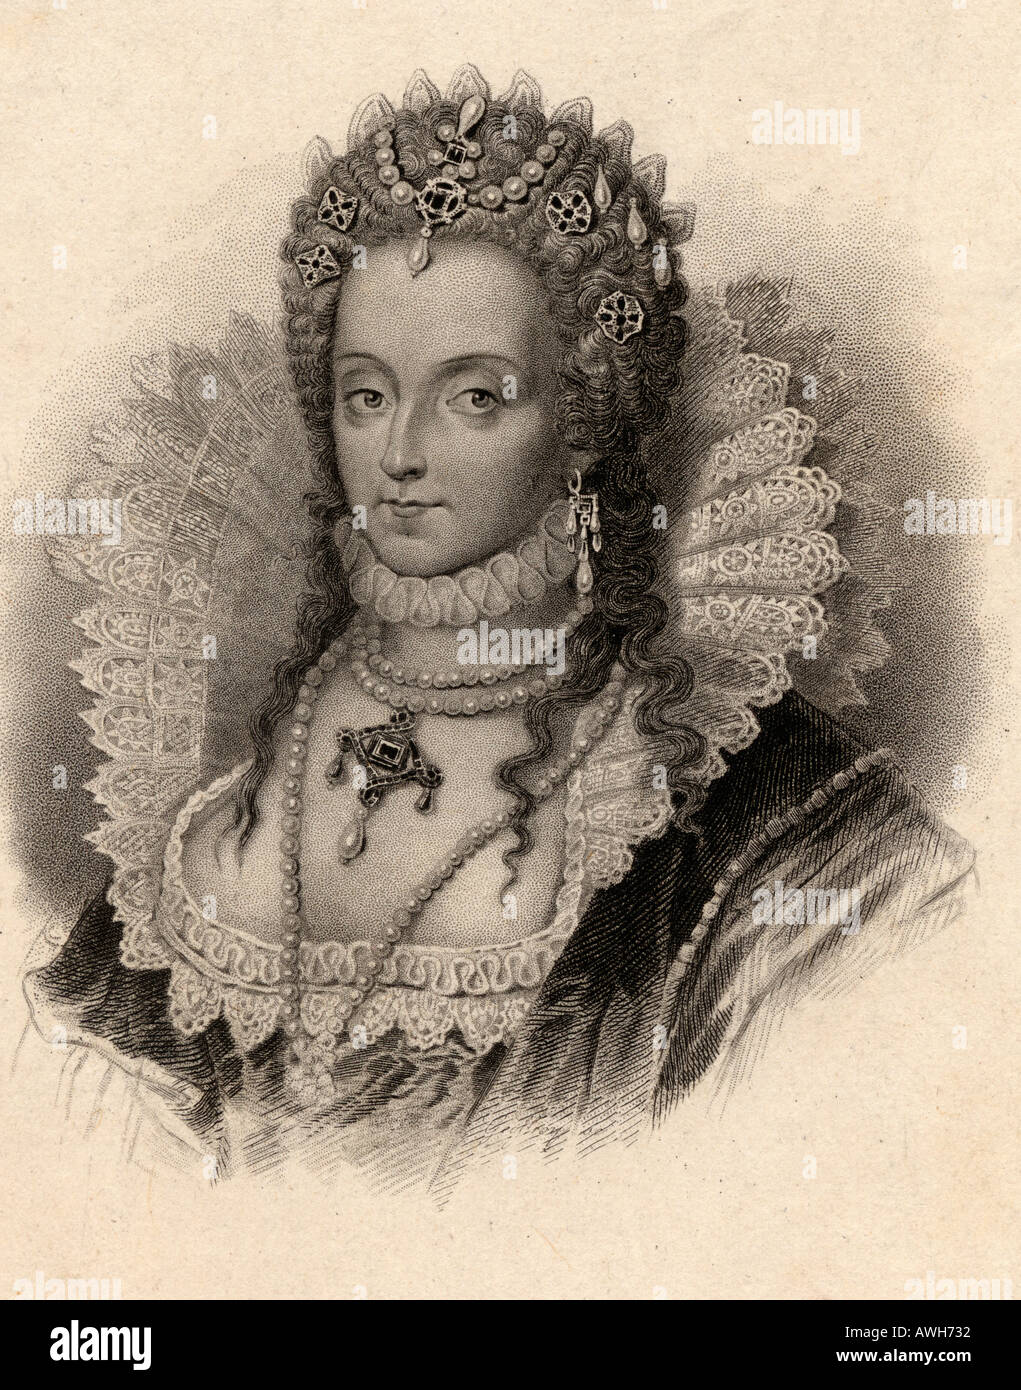 Elisabetta I, 1533 - 1603. Regina dell'Inghilterra. Da un'antica stampa Foto Stock